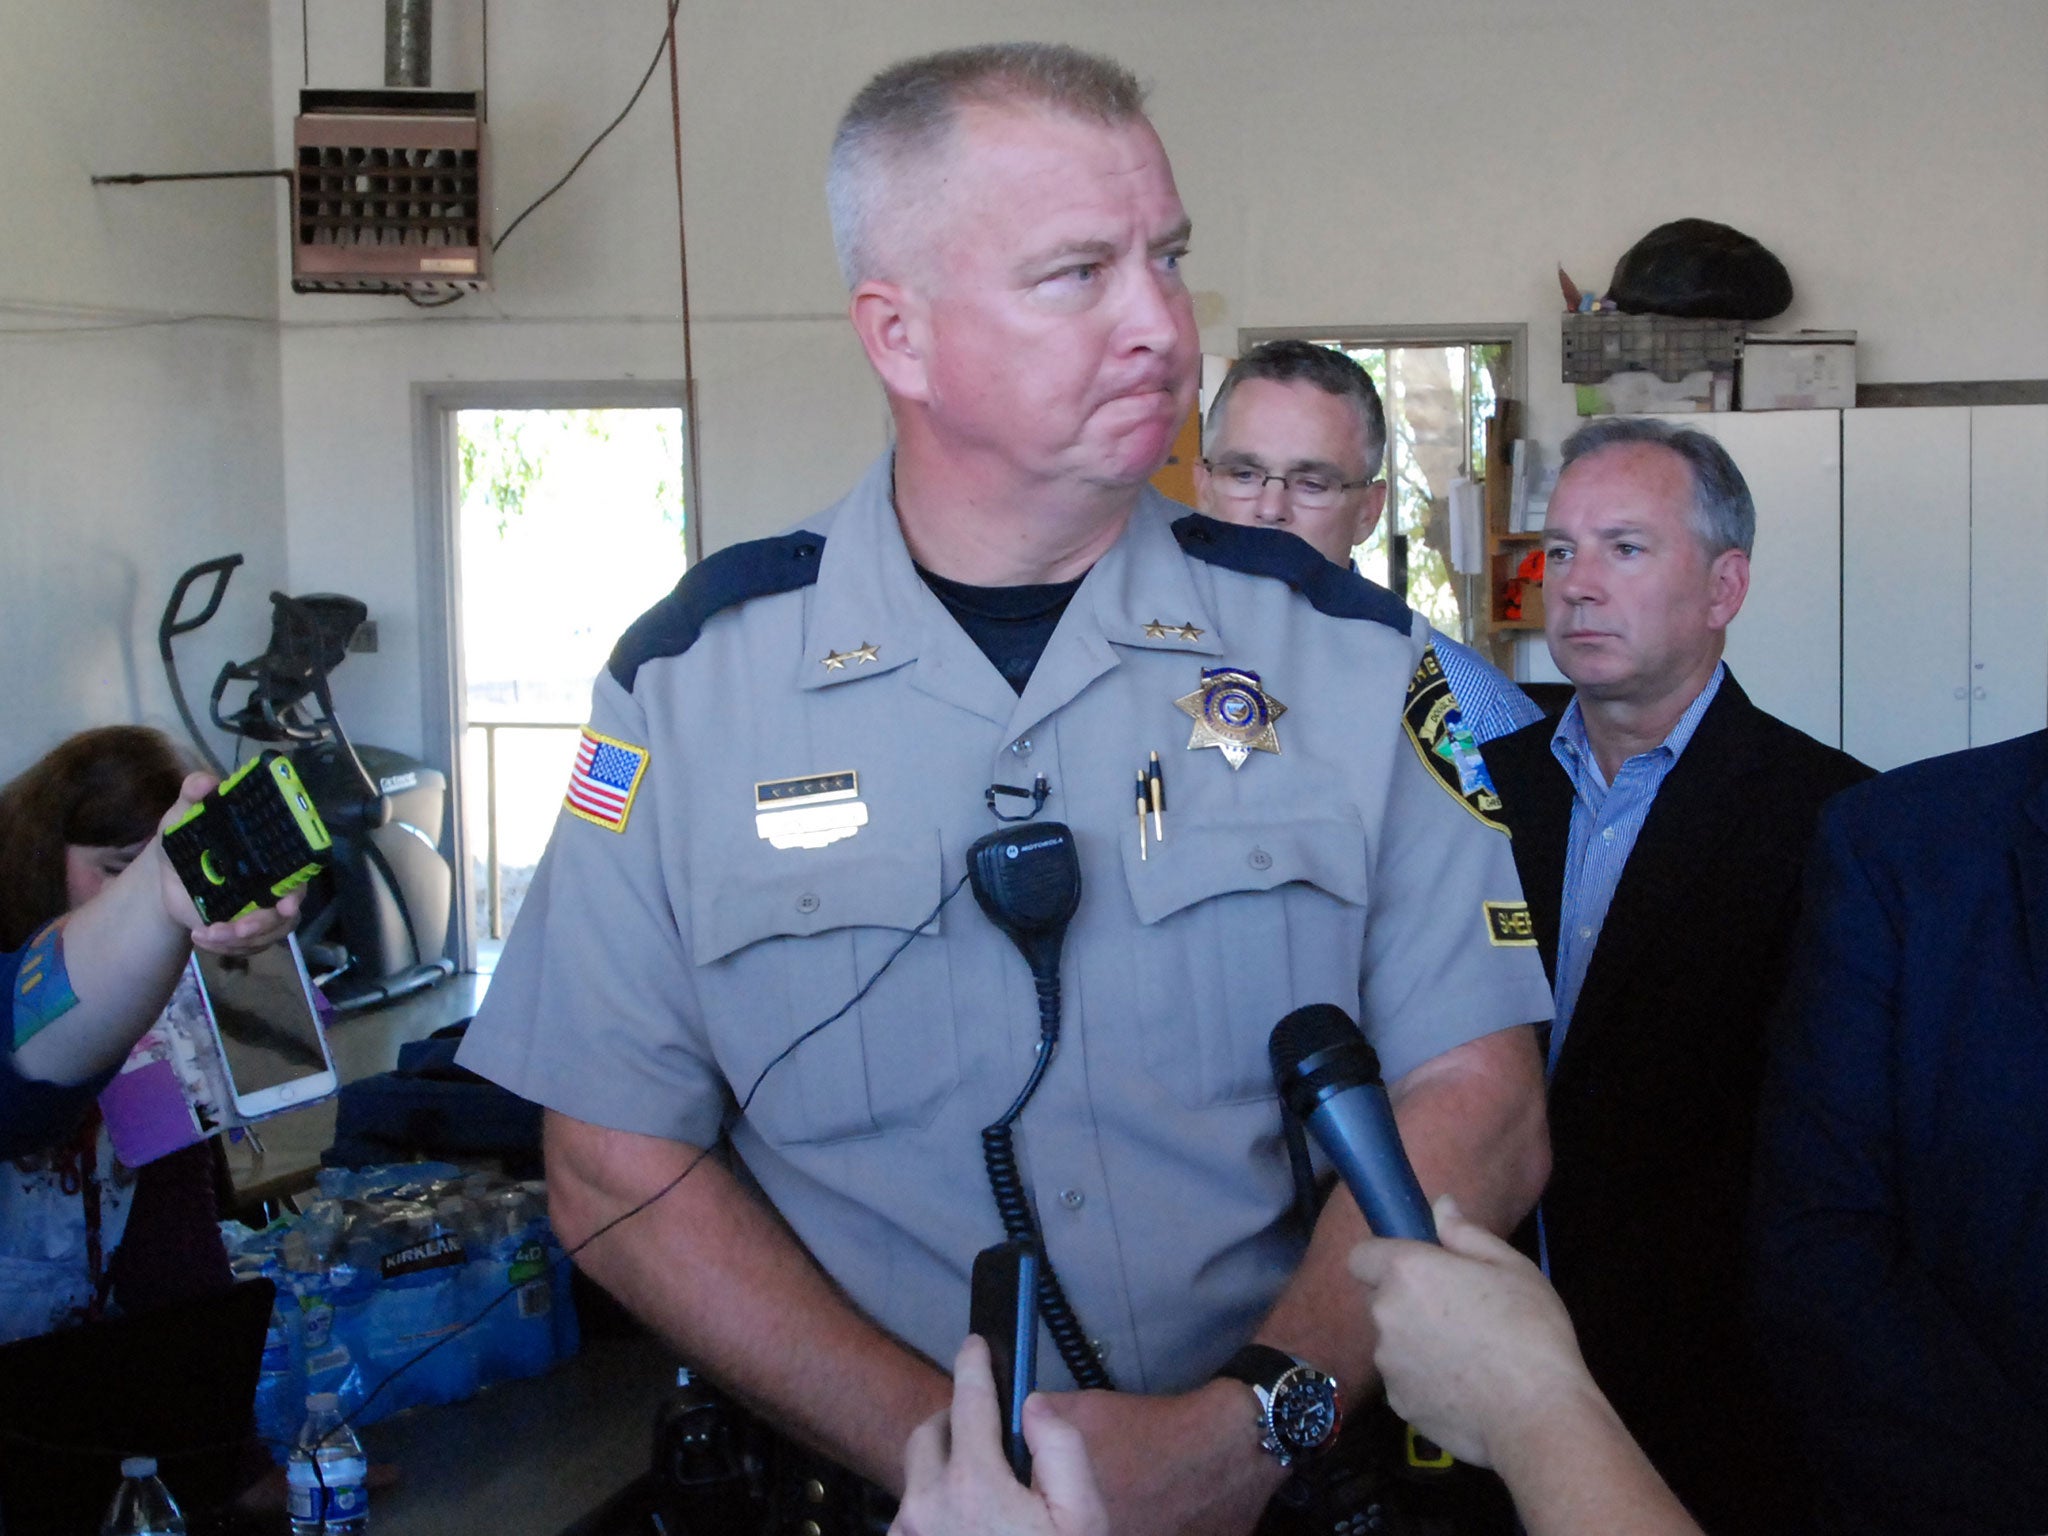 Douglas County Sheriff John Hanlin addresses the media following a deadly shooting at Umpqua Community College in Roseburg, Oregon